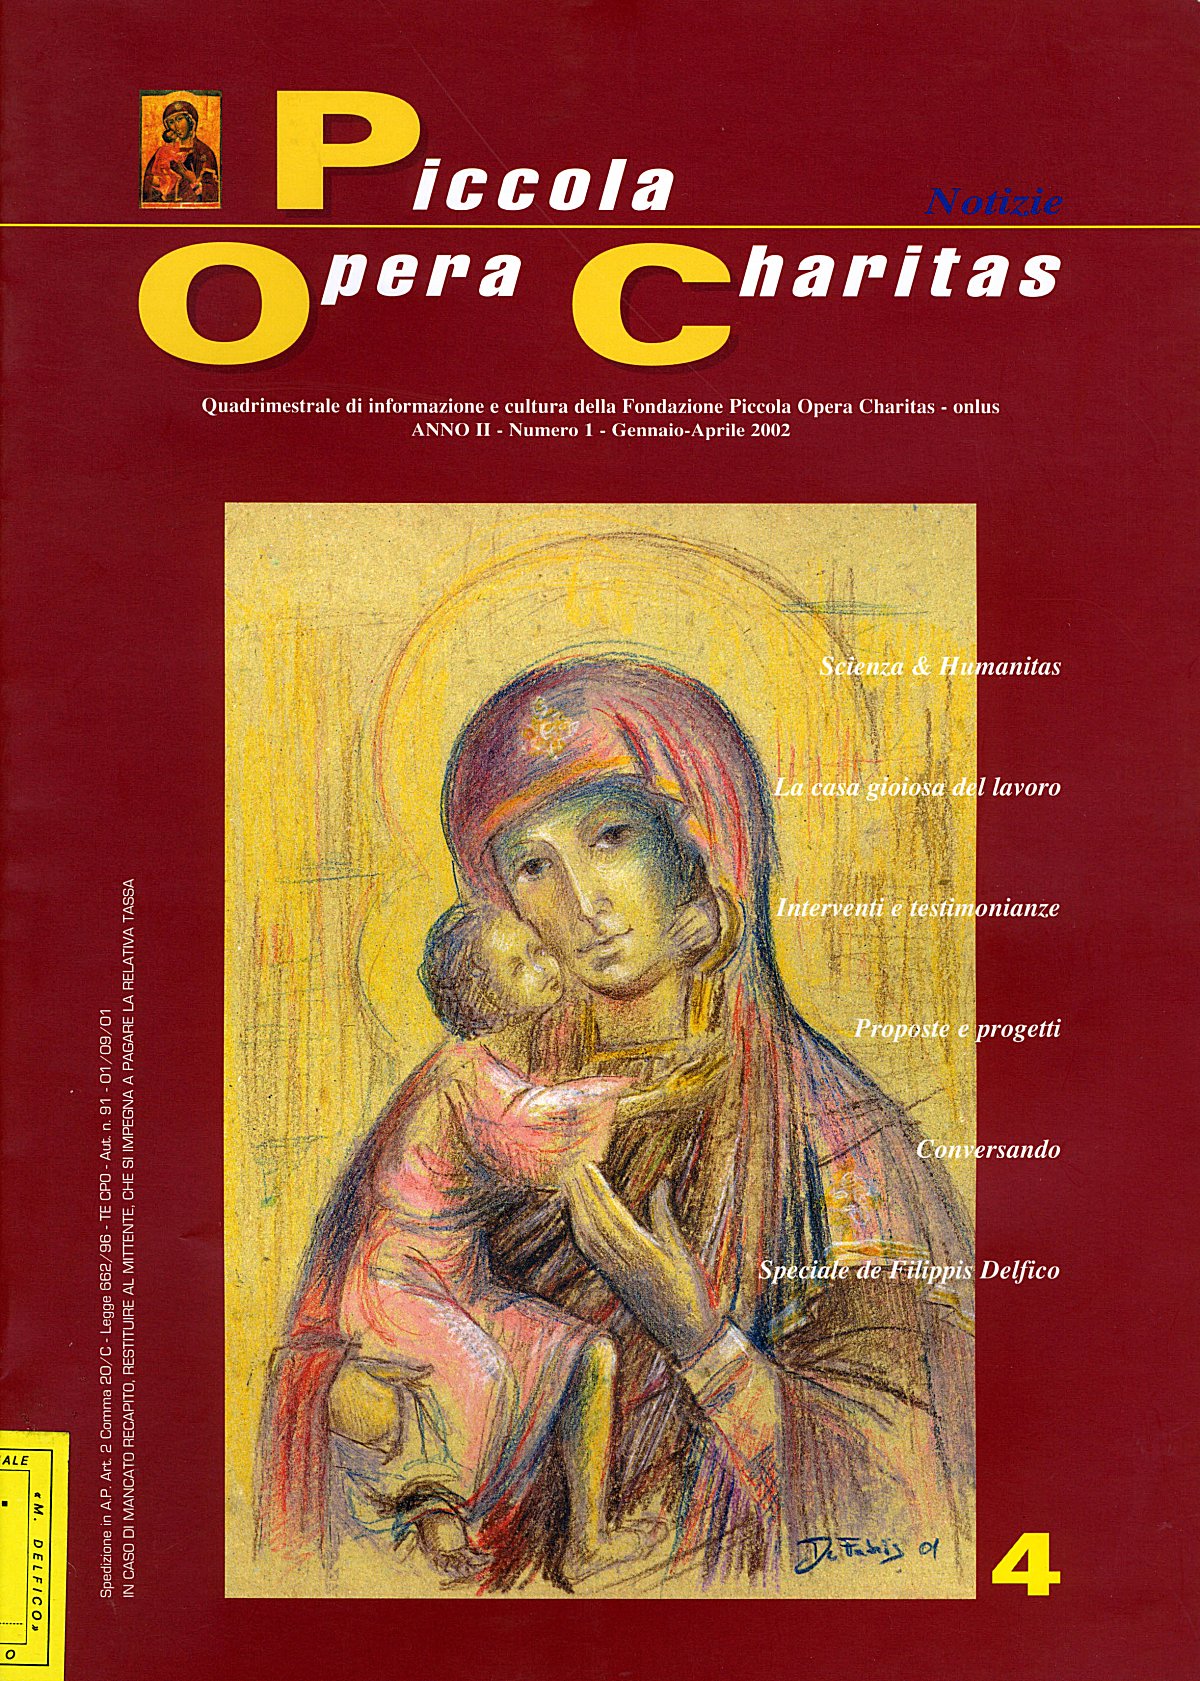 "Piccola Opera Charitas", anno II, n. 1, gennaio-aprile 2002